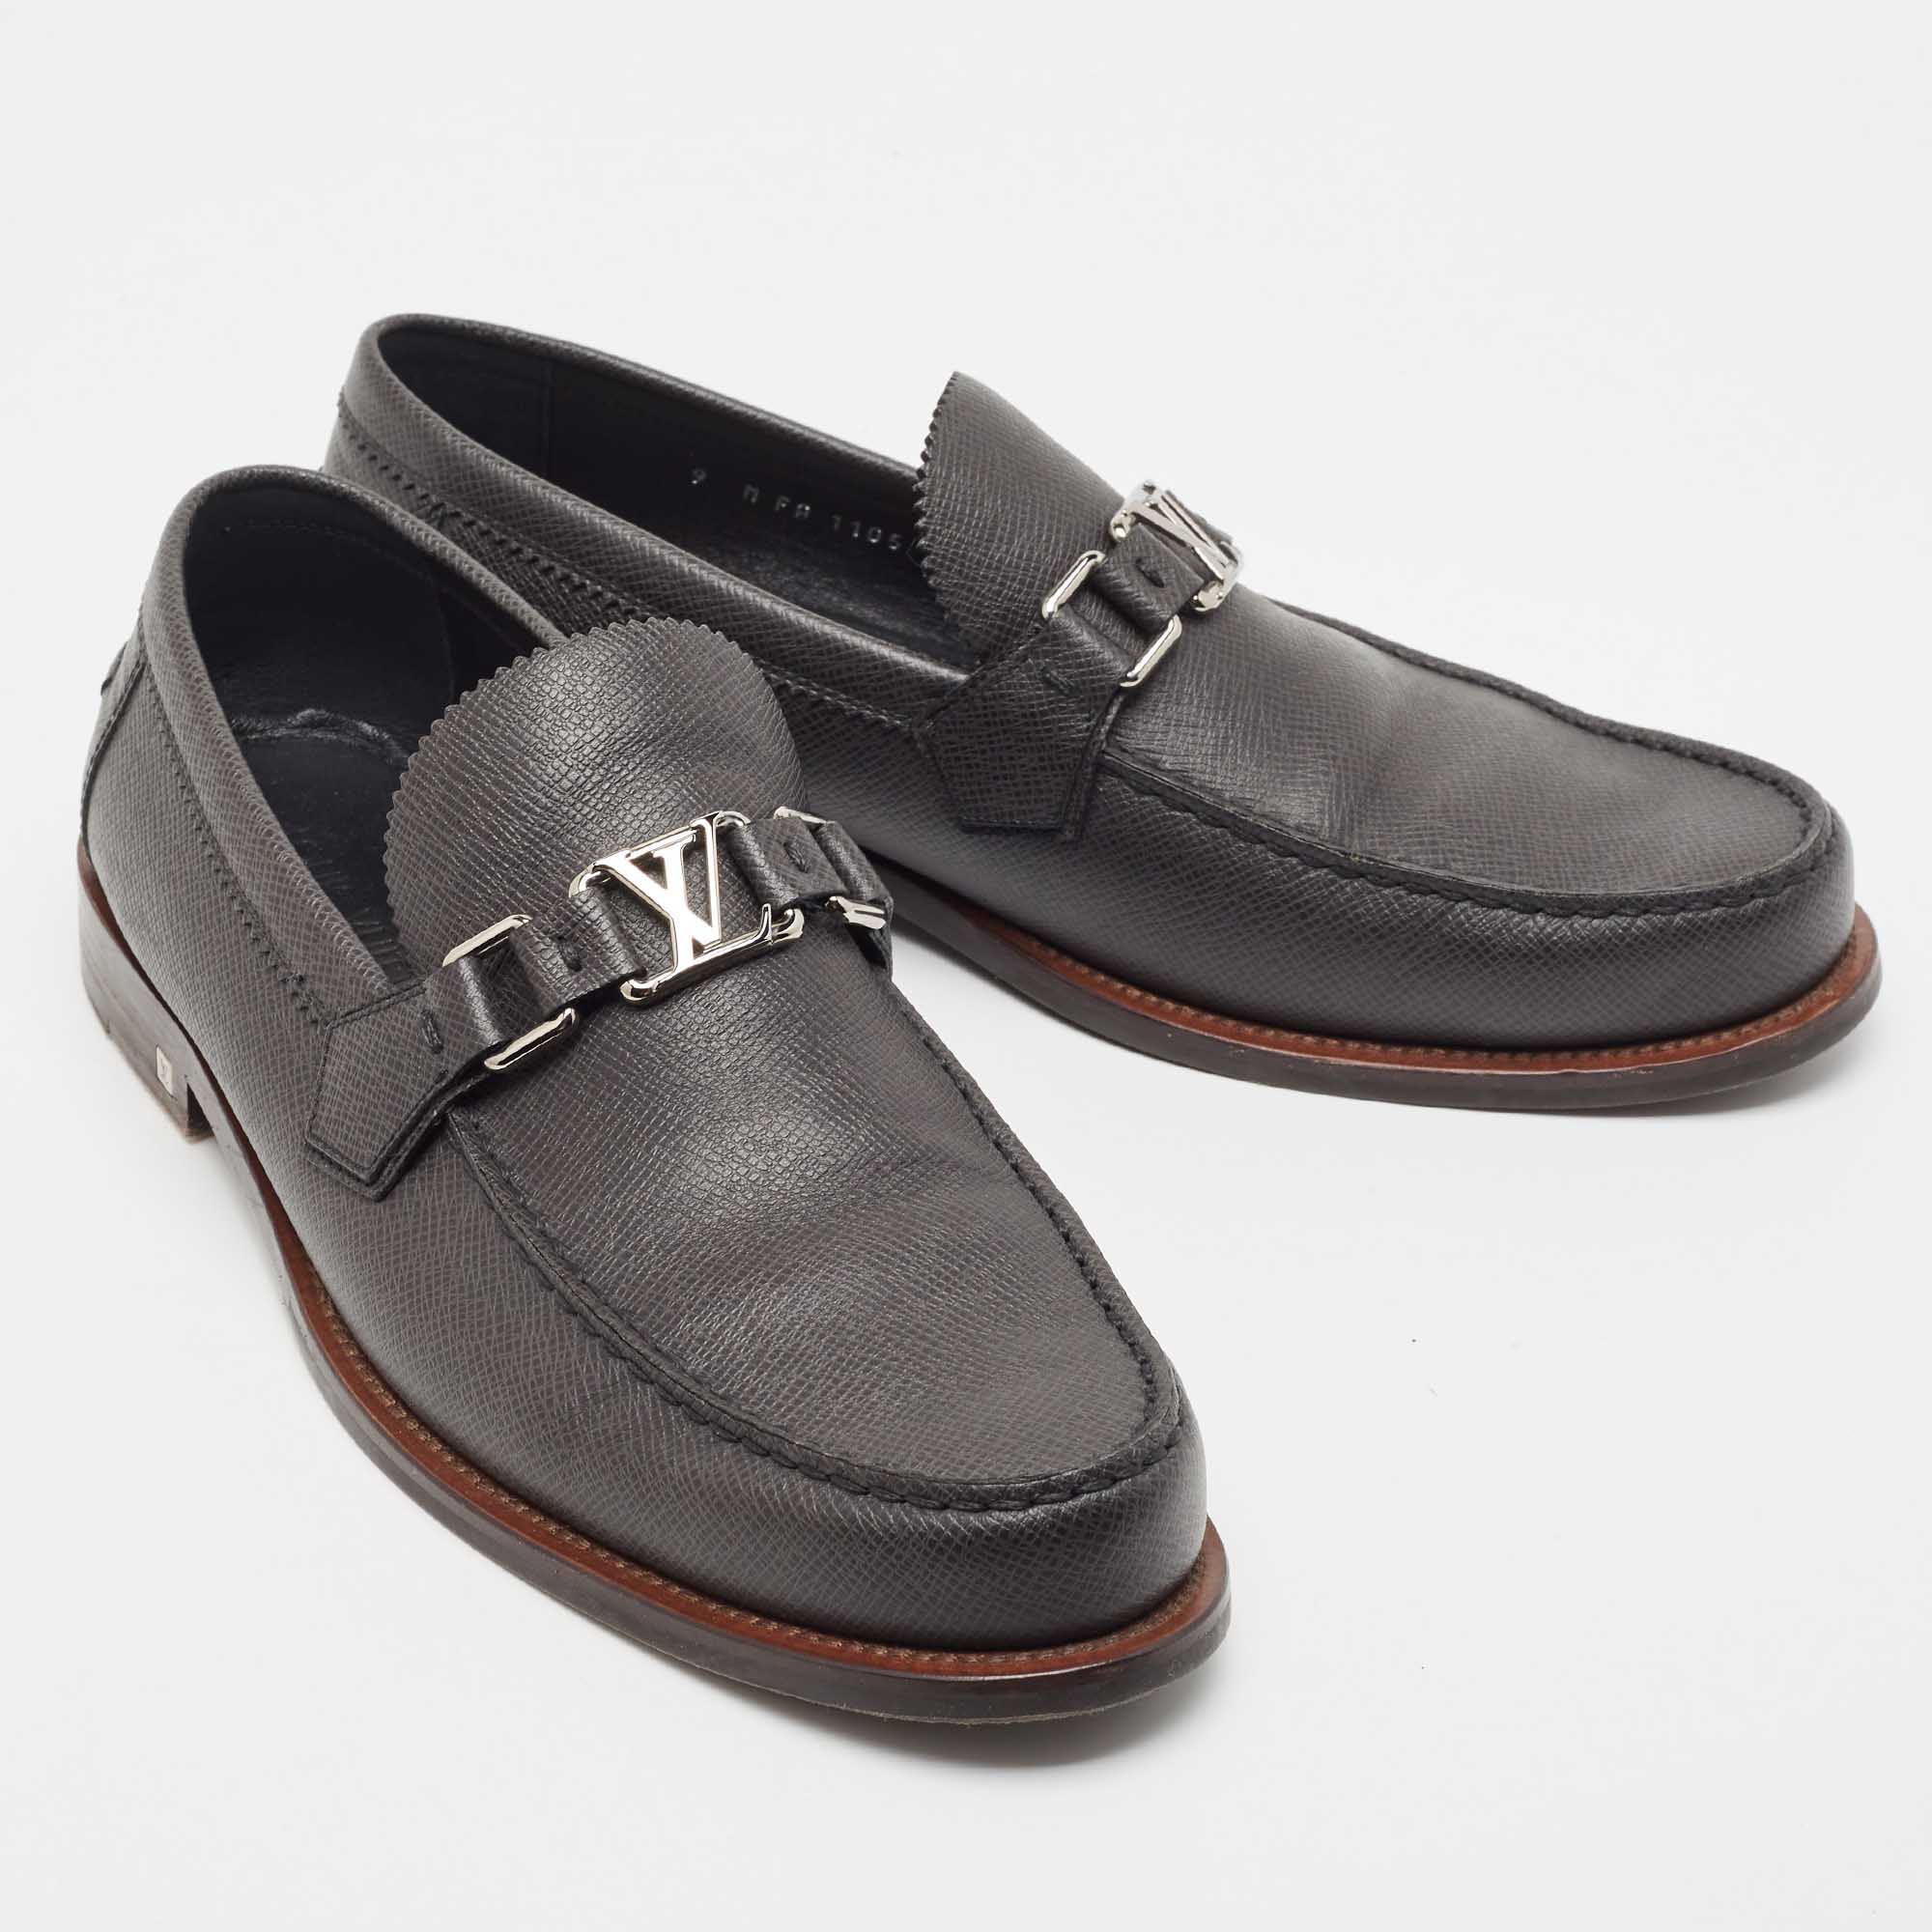 Louis Vuitton Black Leather Major Loafers Size 43